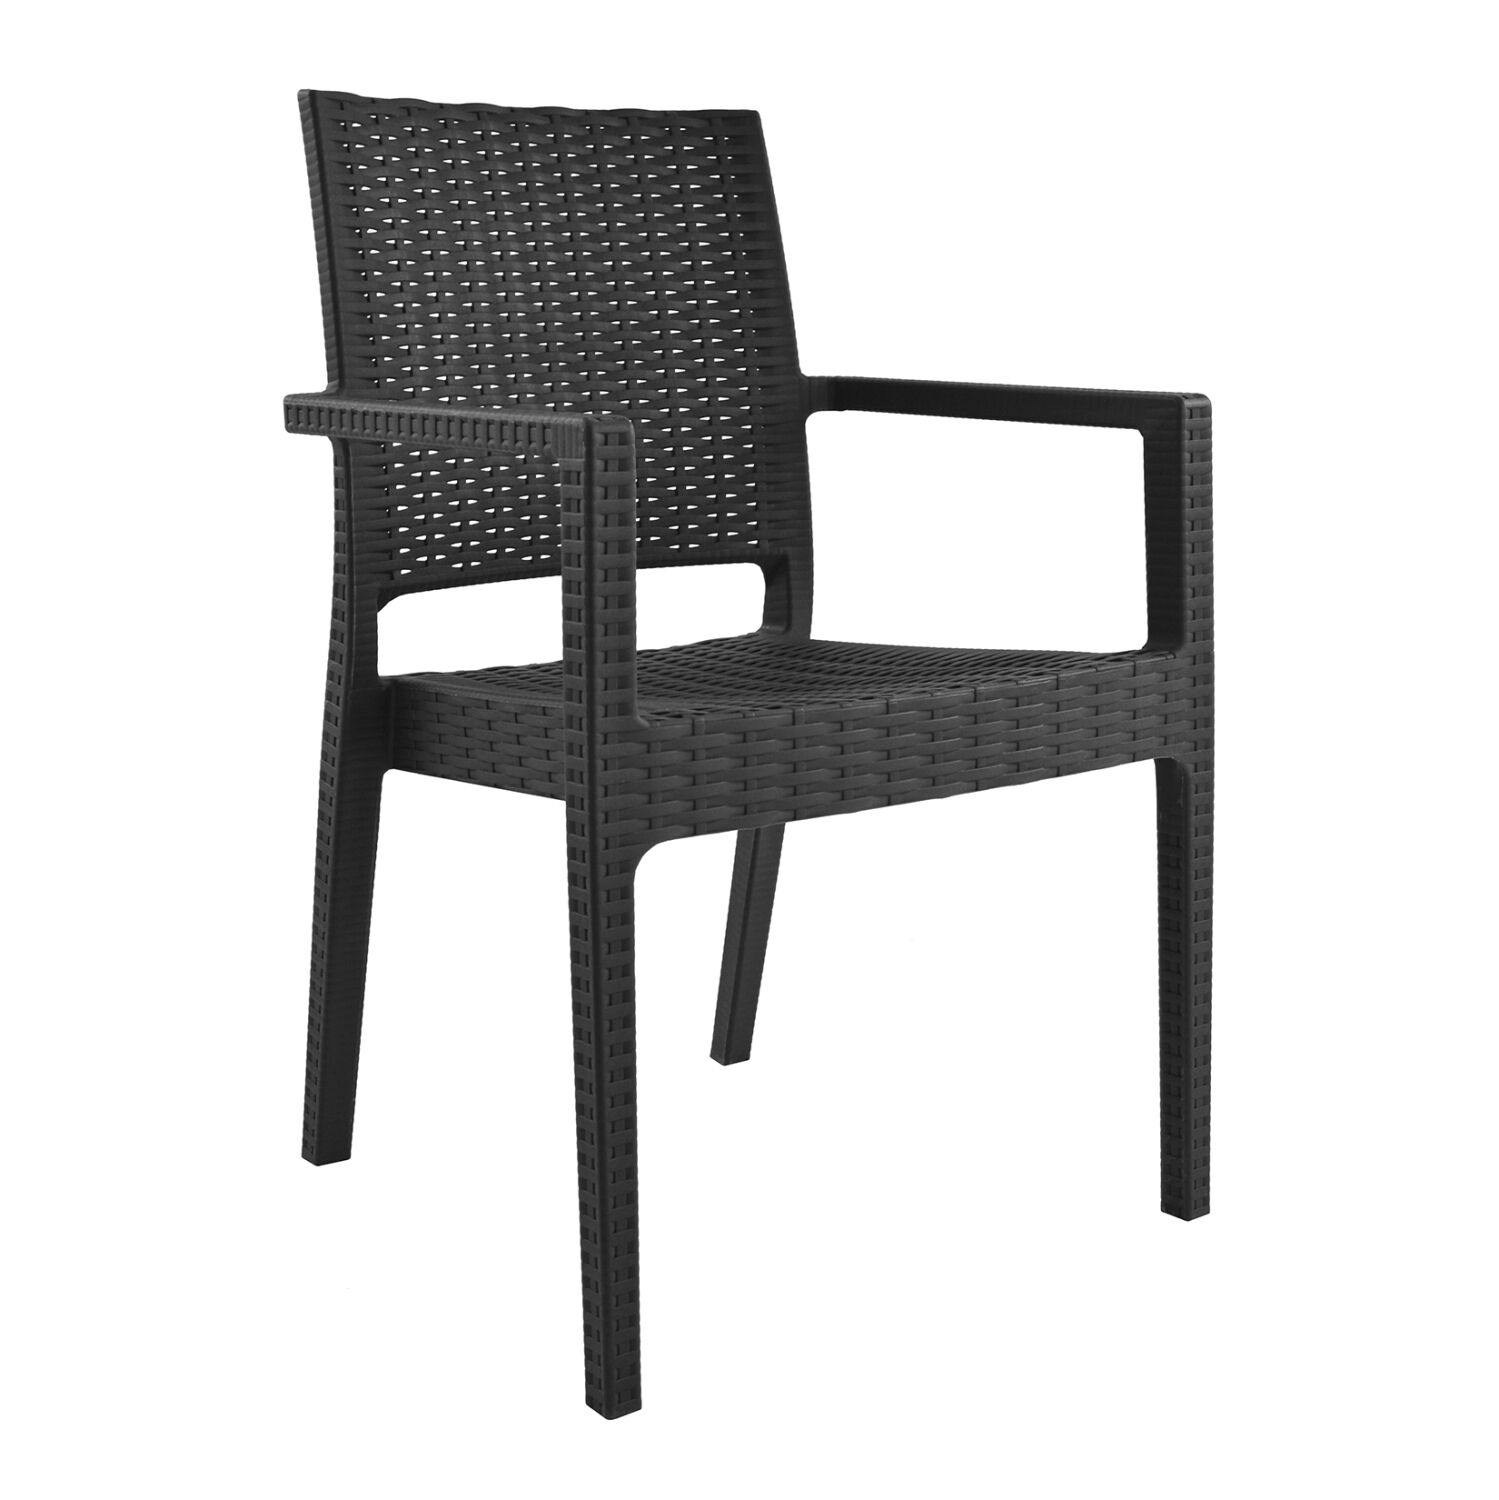 Chair with arms Polypropylene Dark Grey HM5134.01 57x55,5x89 cm